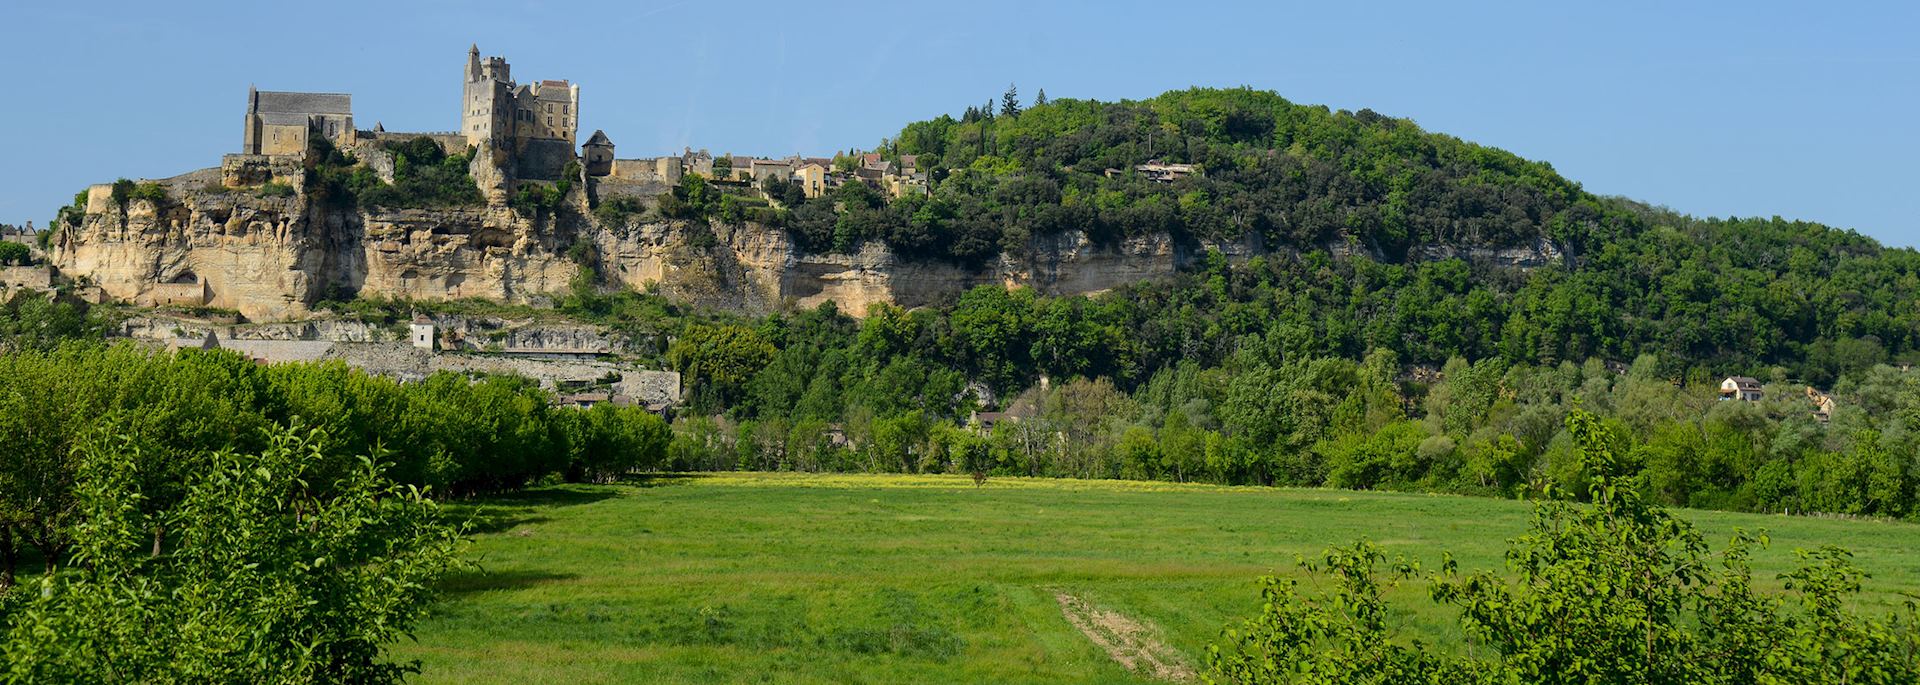 Views overlooking Château de Beynac, Beynac-et-Cazenac, Dordogne